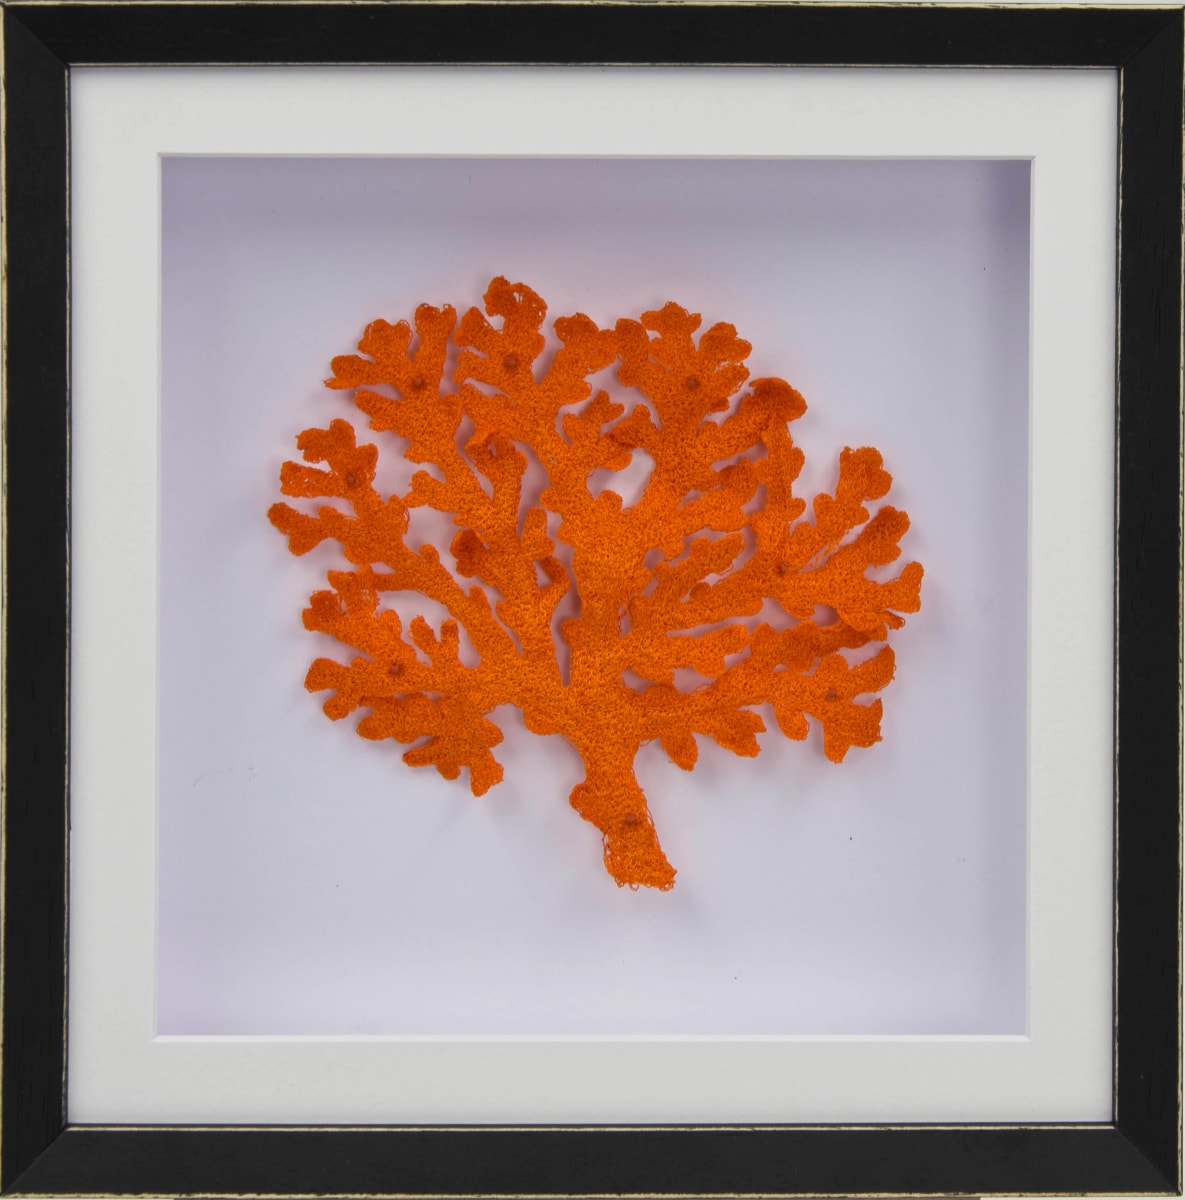 Orange Lace Coral 